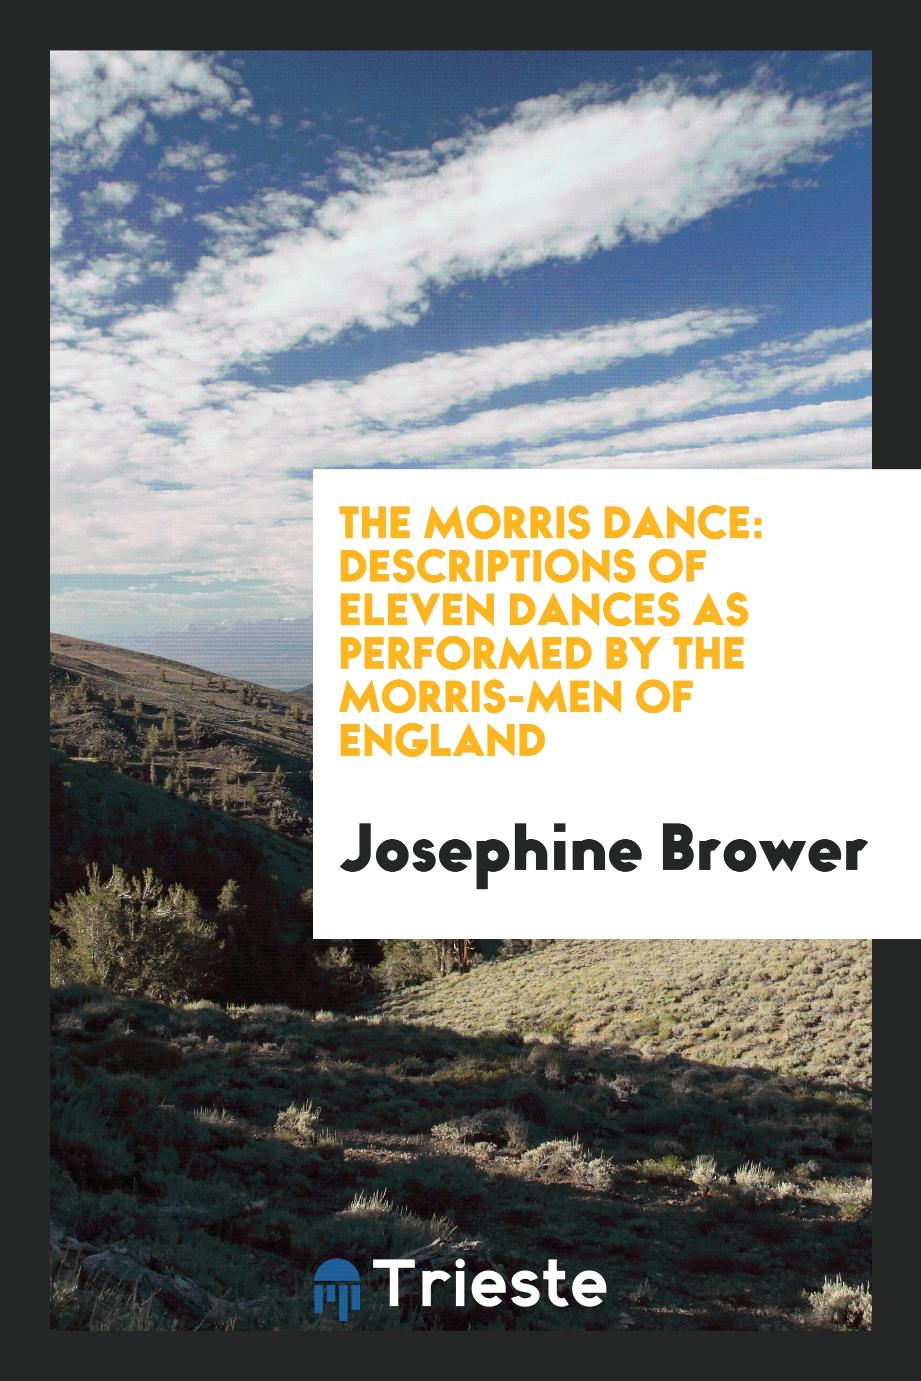 The Morris dance: descriptions of eleven dances as performed by the Morris-Men of England